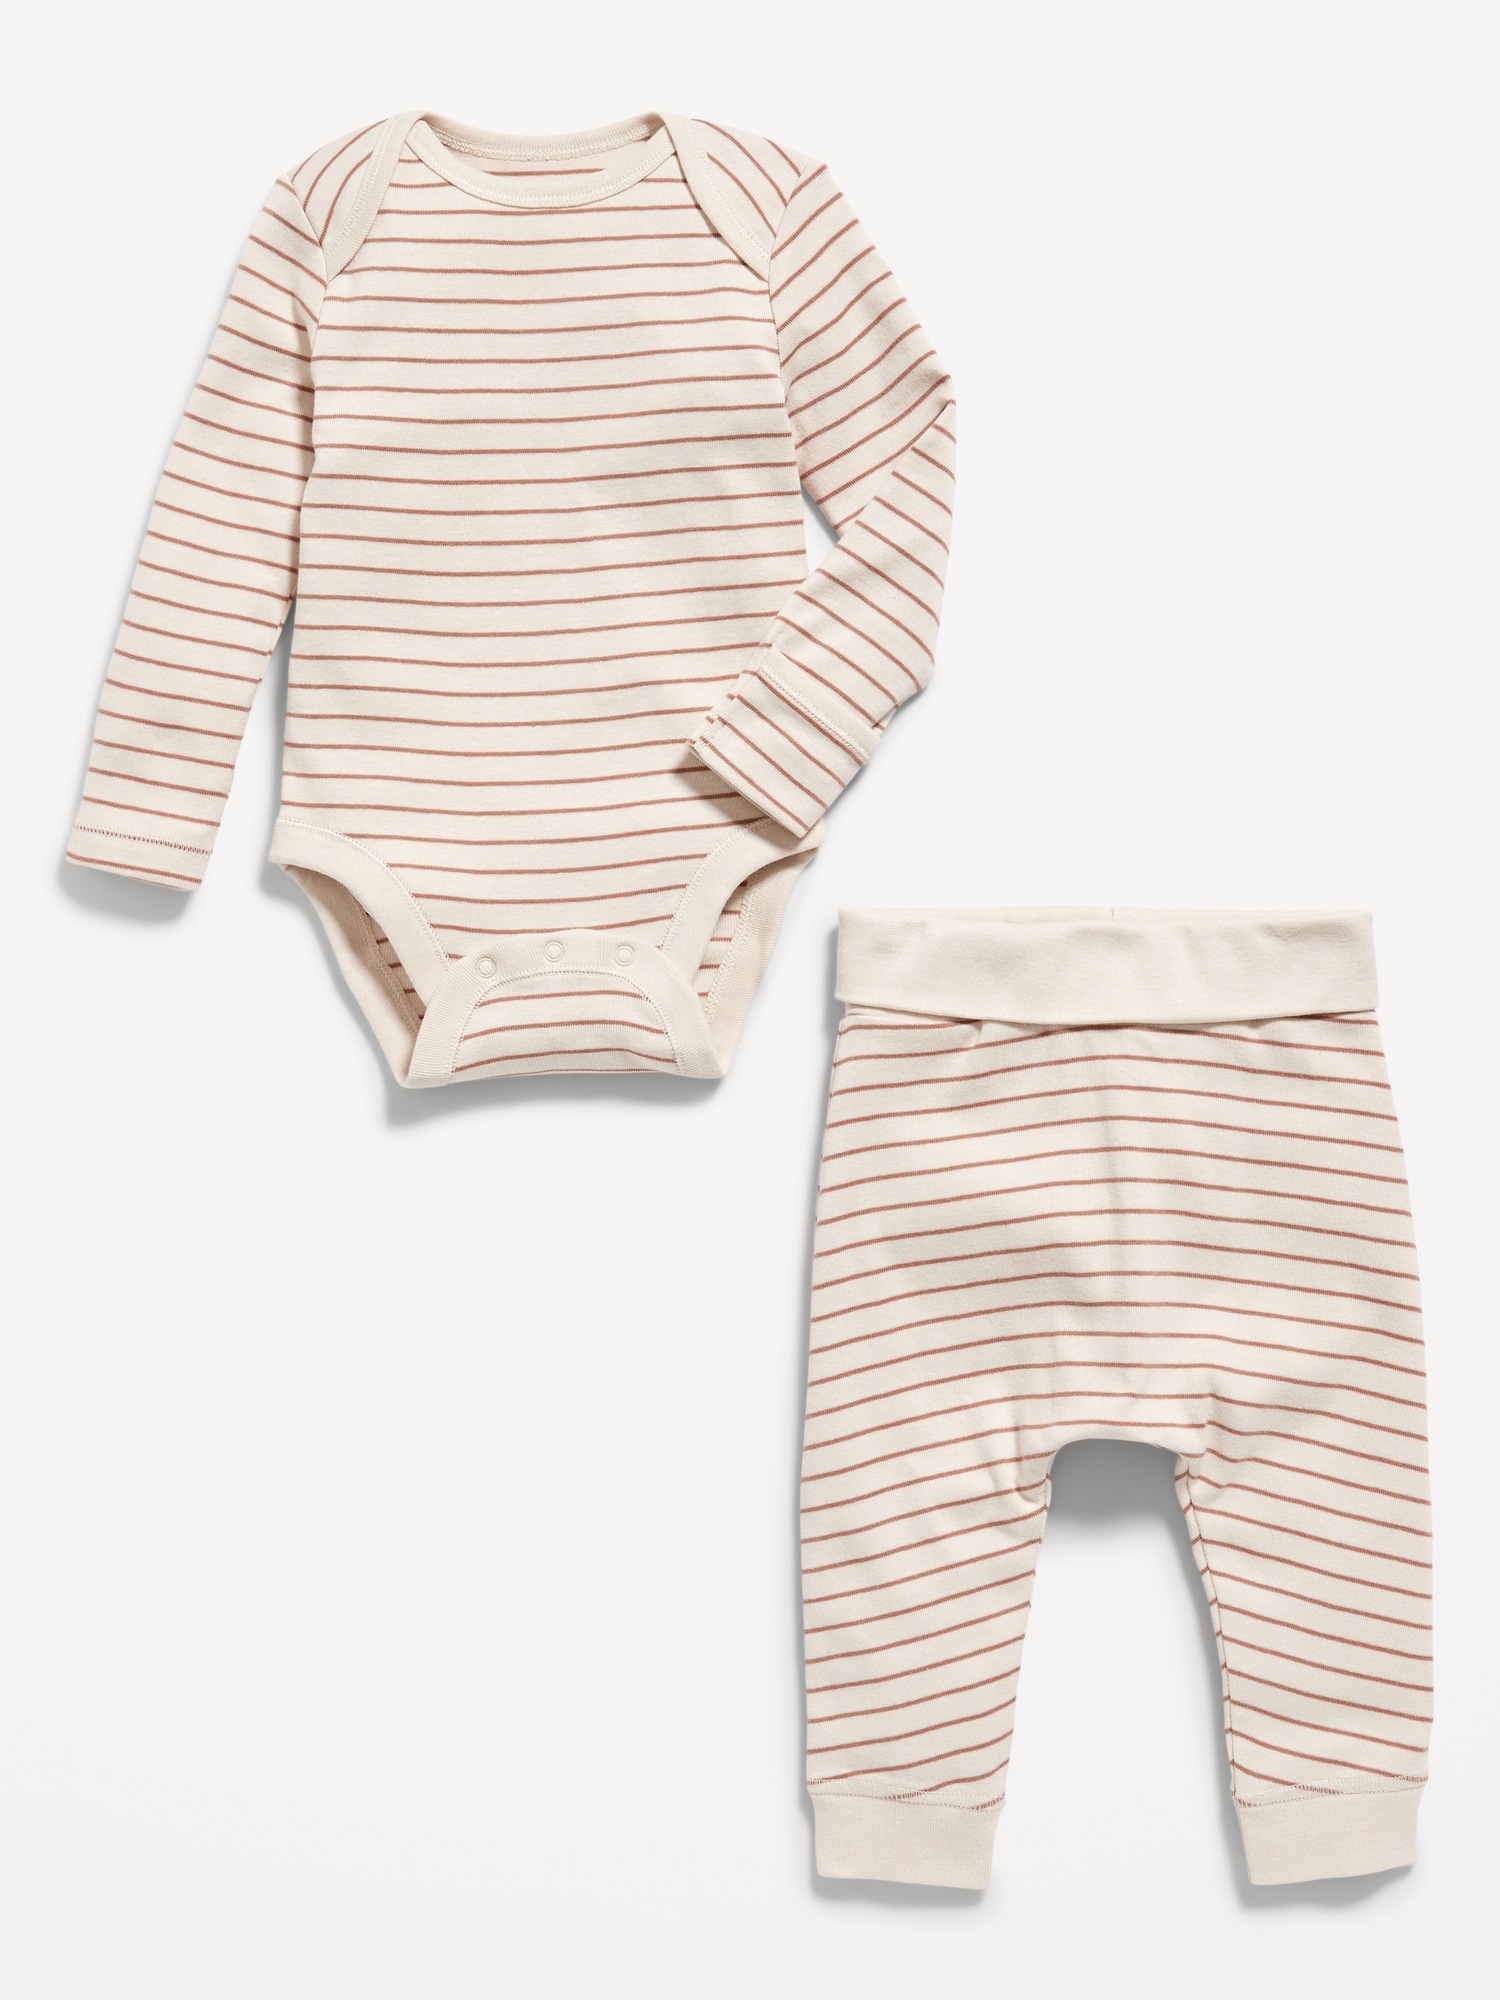 Unisex Striped Organic-Cotton Bodysuit & Pants Set for Baby